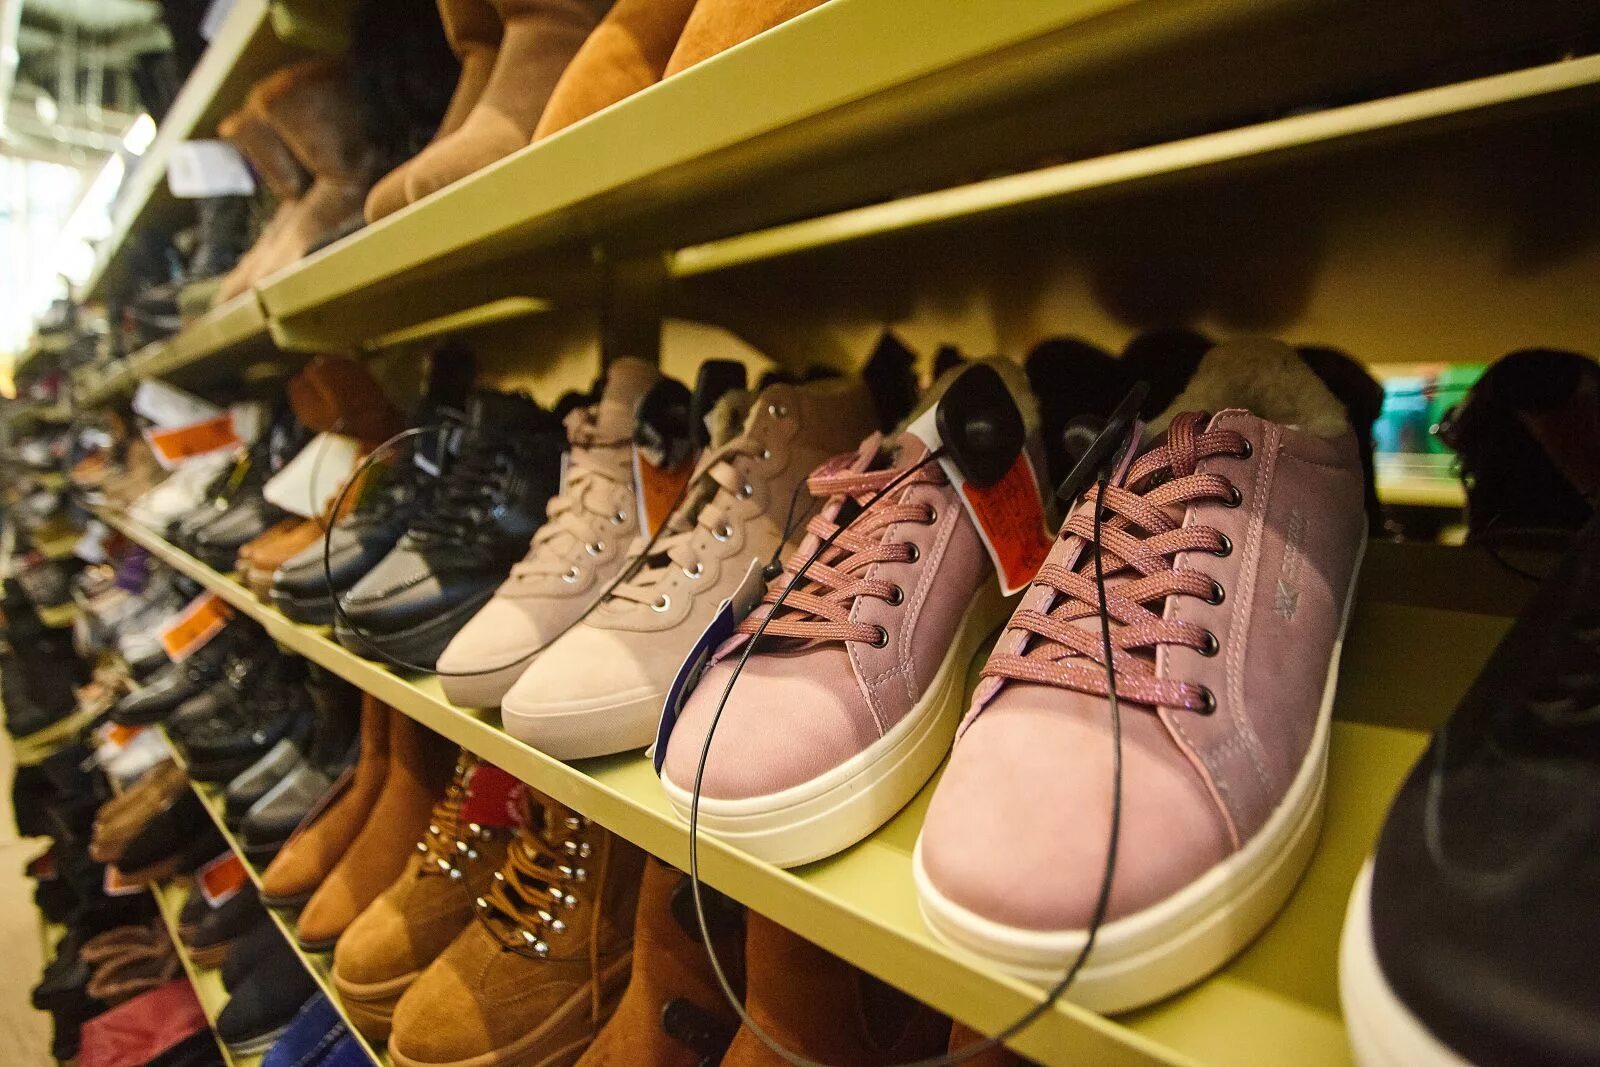 Много одежды и обуви магазин. Магазин одежды и обуви. Одежда и обувь. Магазин брендовой обуви. Фамилия магазин одежды и обуви.